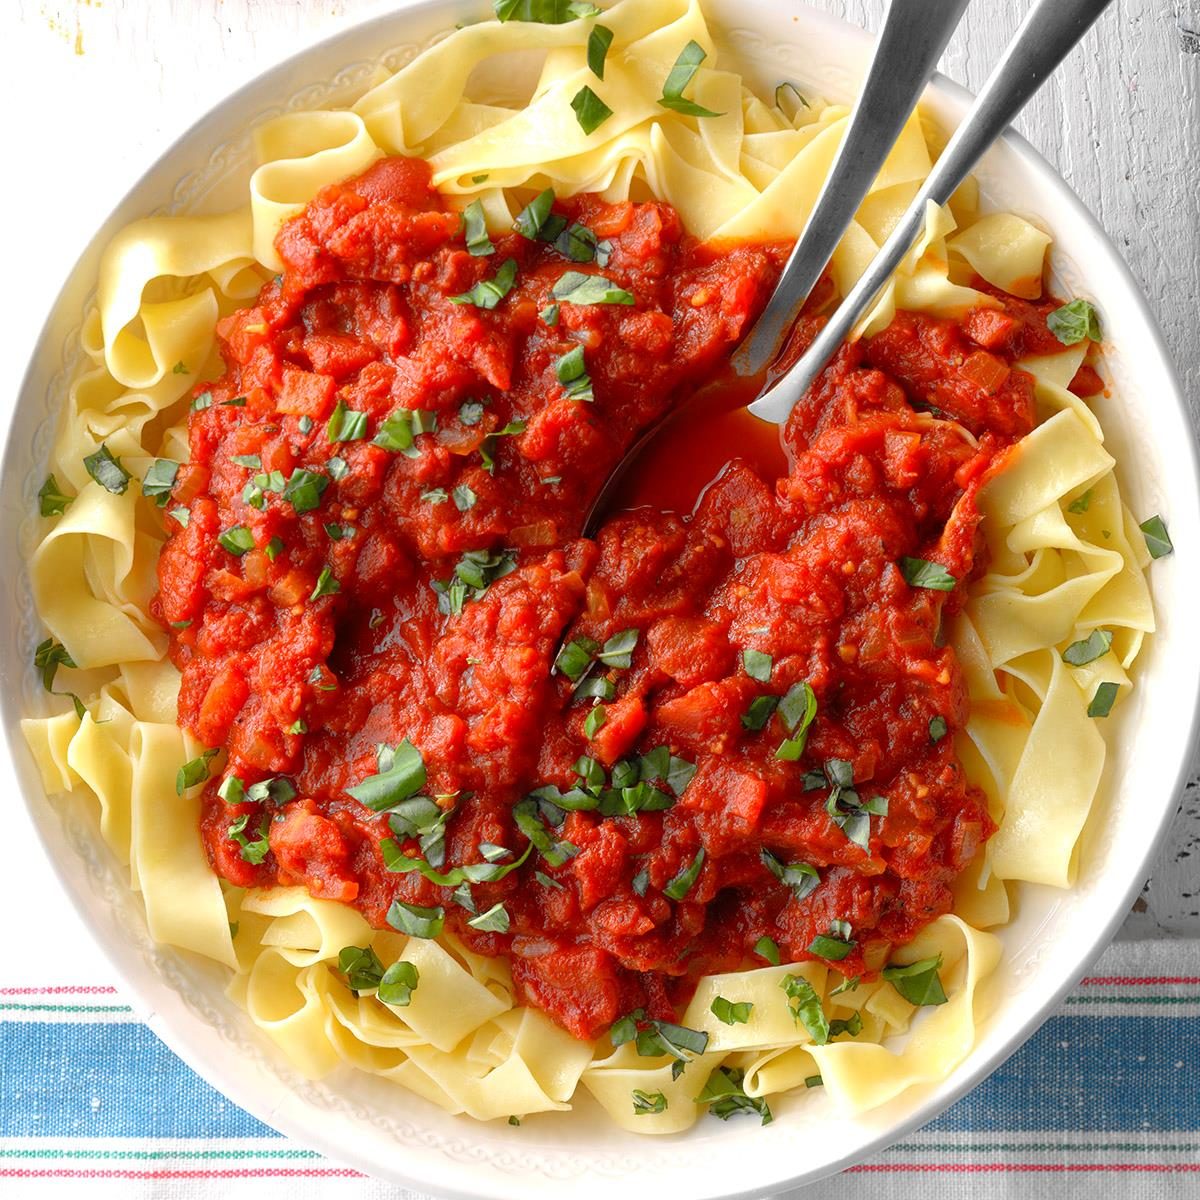 Meatless Spaghetti Sauce Recipe: How to Make It